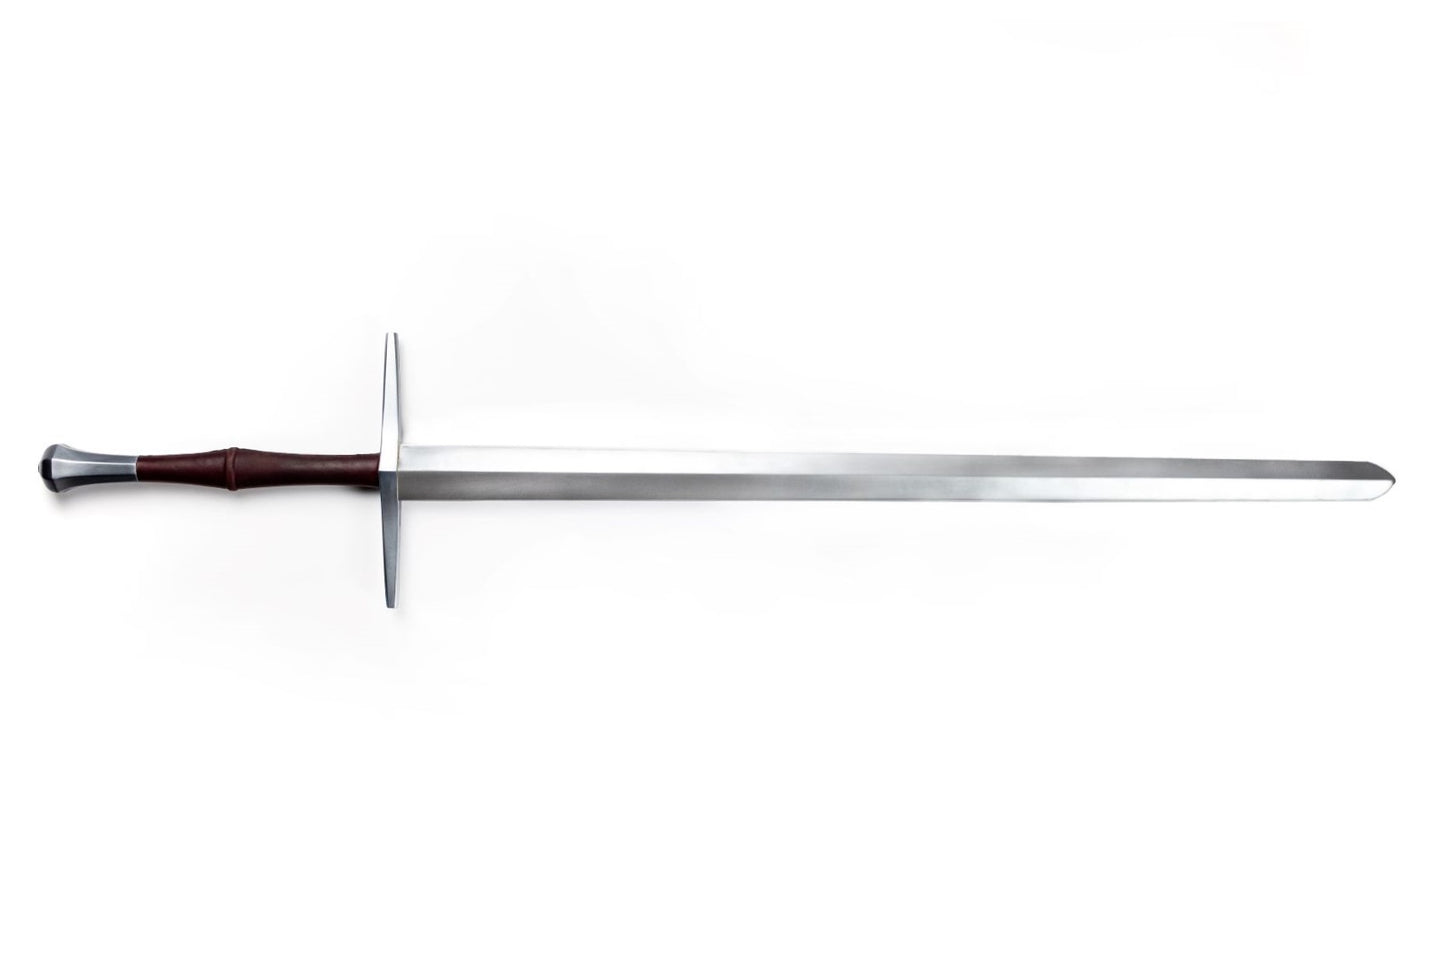 Bastard sword